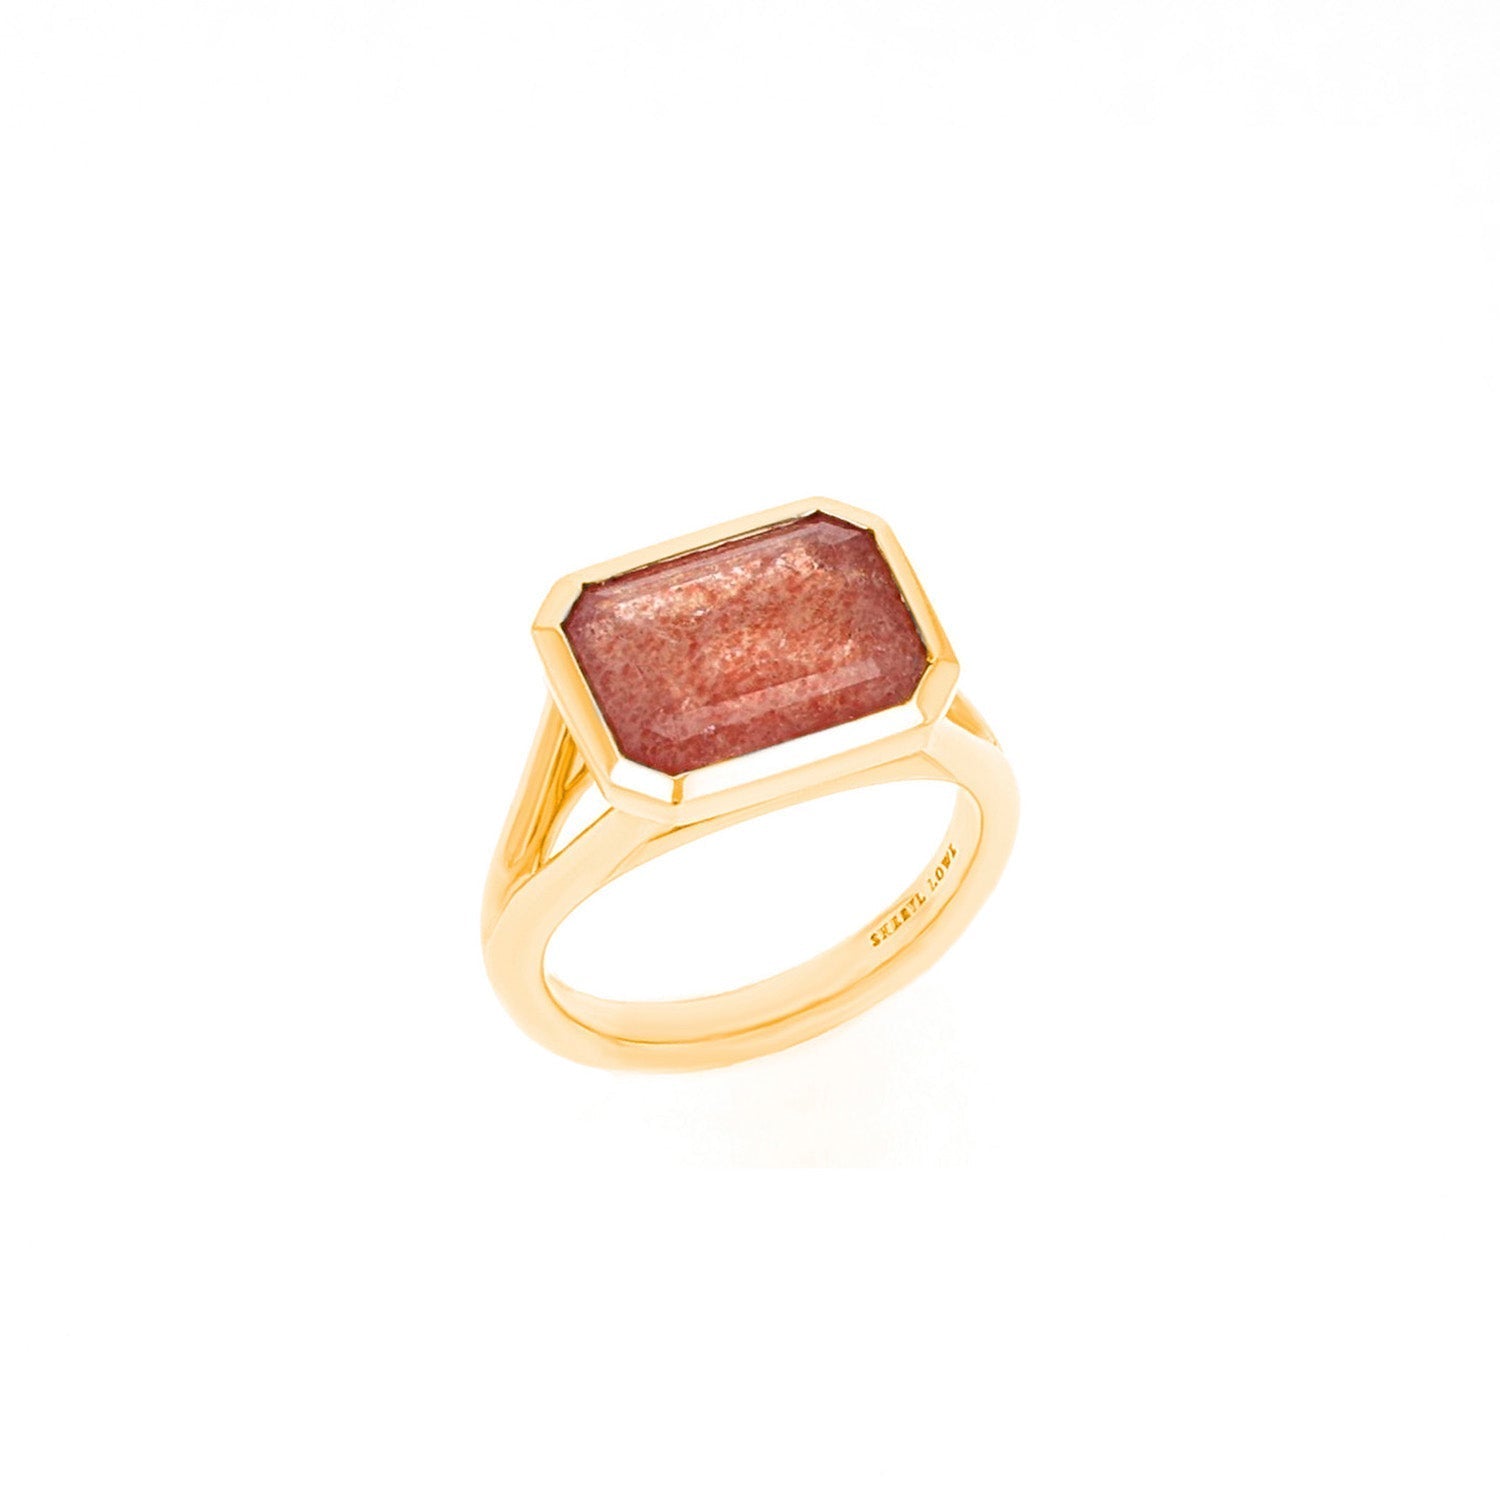 The Joni 14k Gold Emerald Cut Ring - Strawberry Quartz  SRG110-8 - TBird